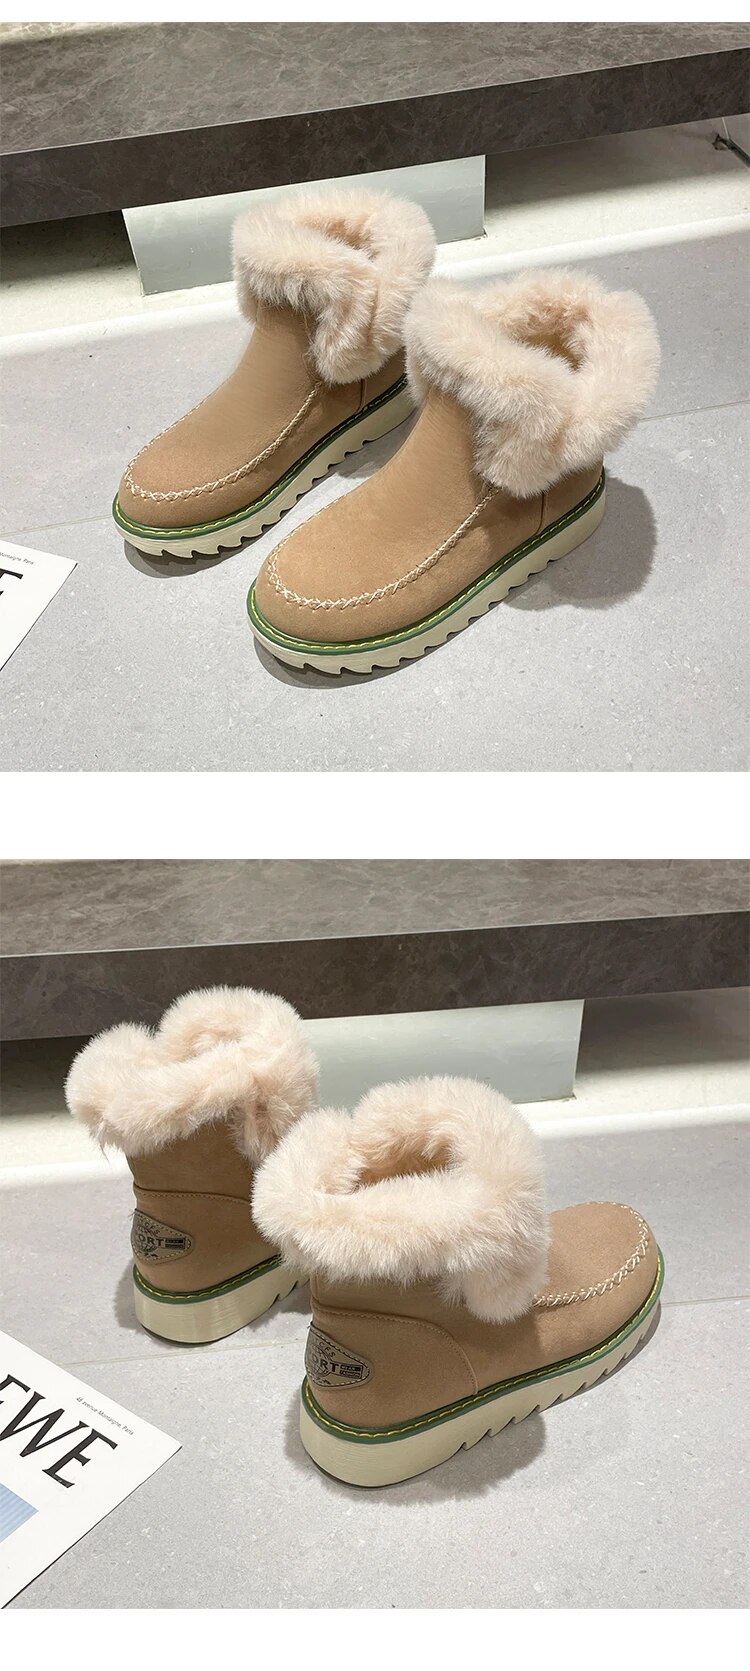 come4buy.com-Women Suede Snow Boots Warm Plush Ankle Boots